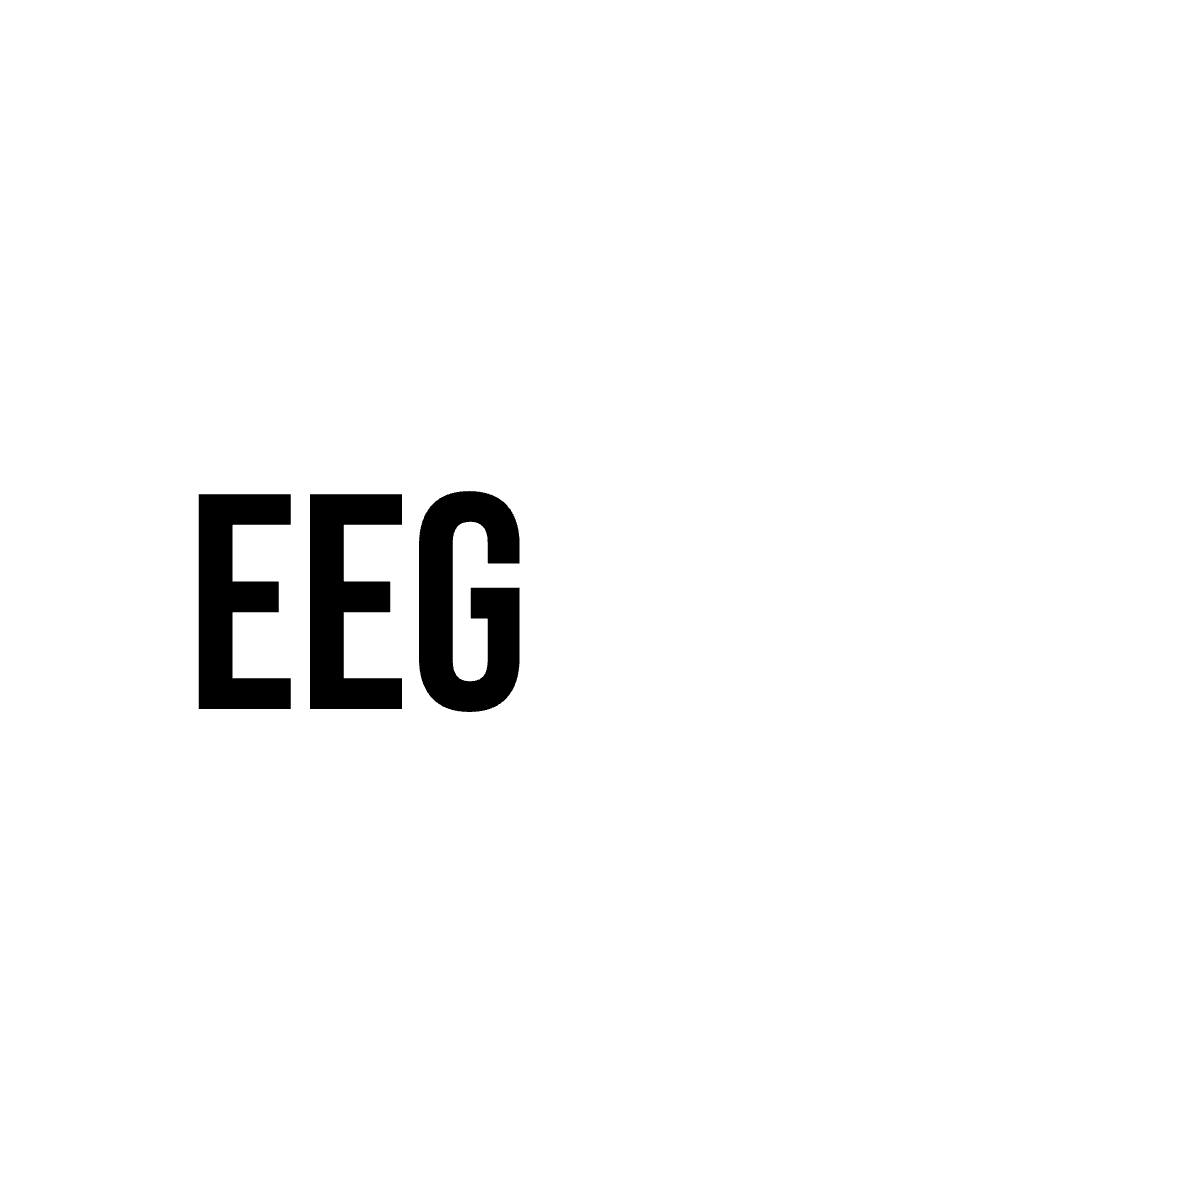 Endeavors Entertainment Group